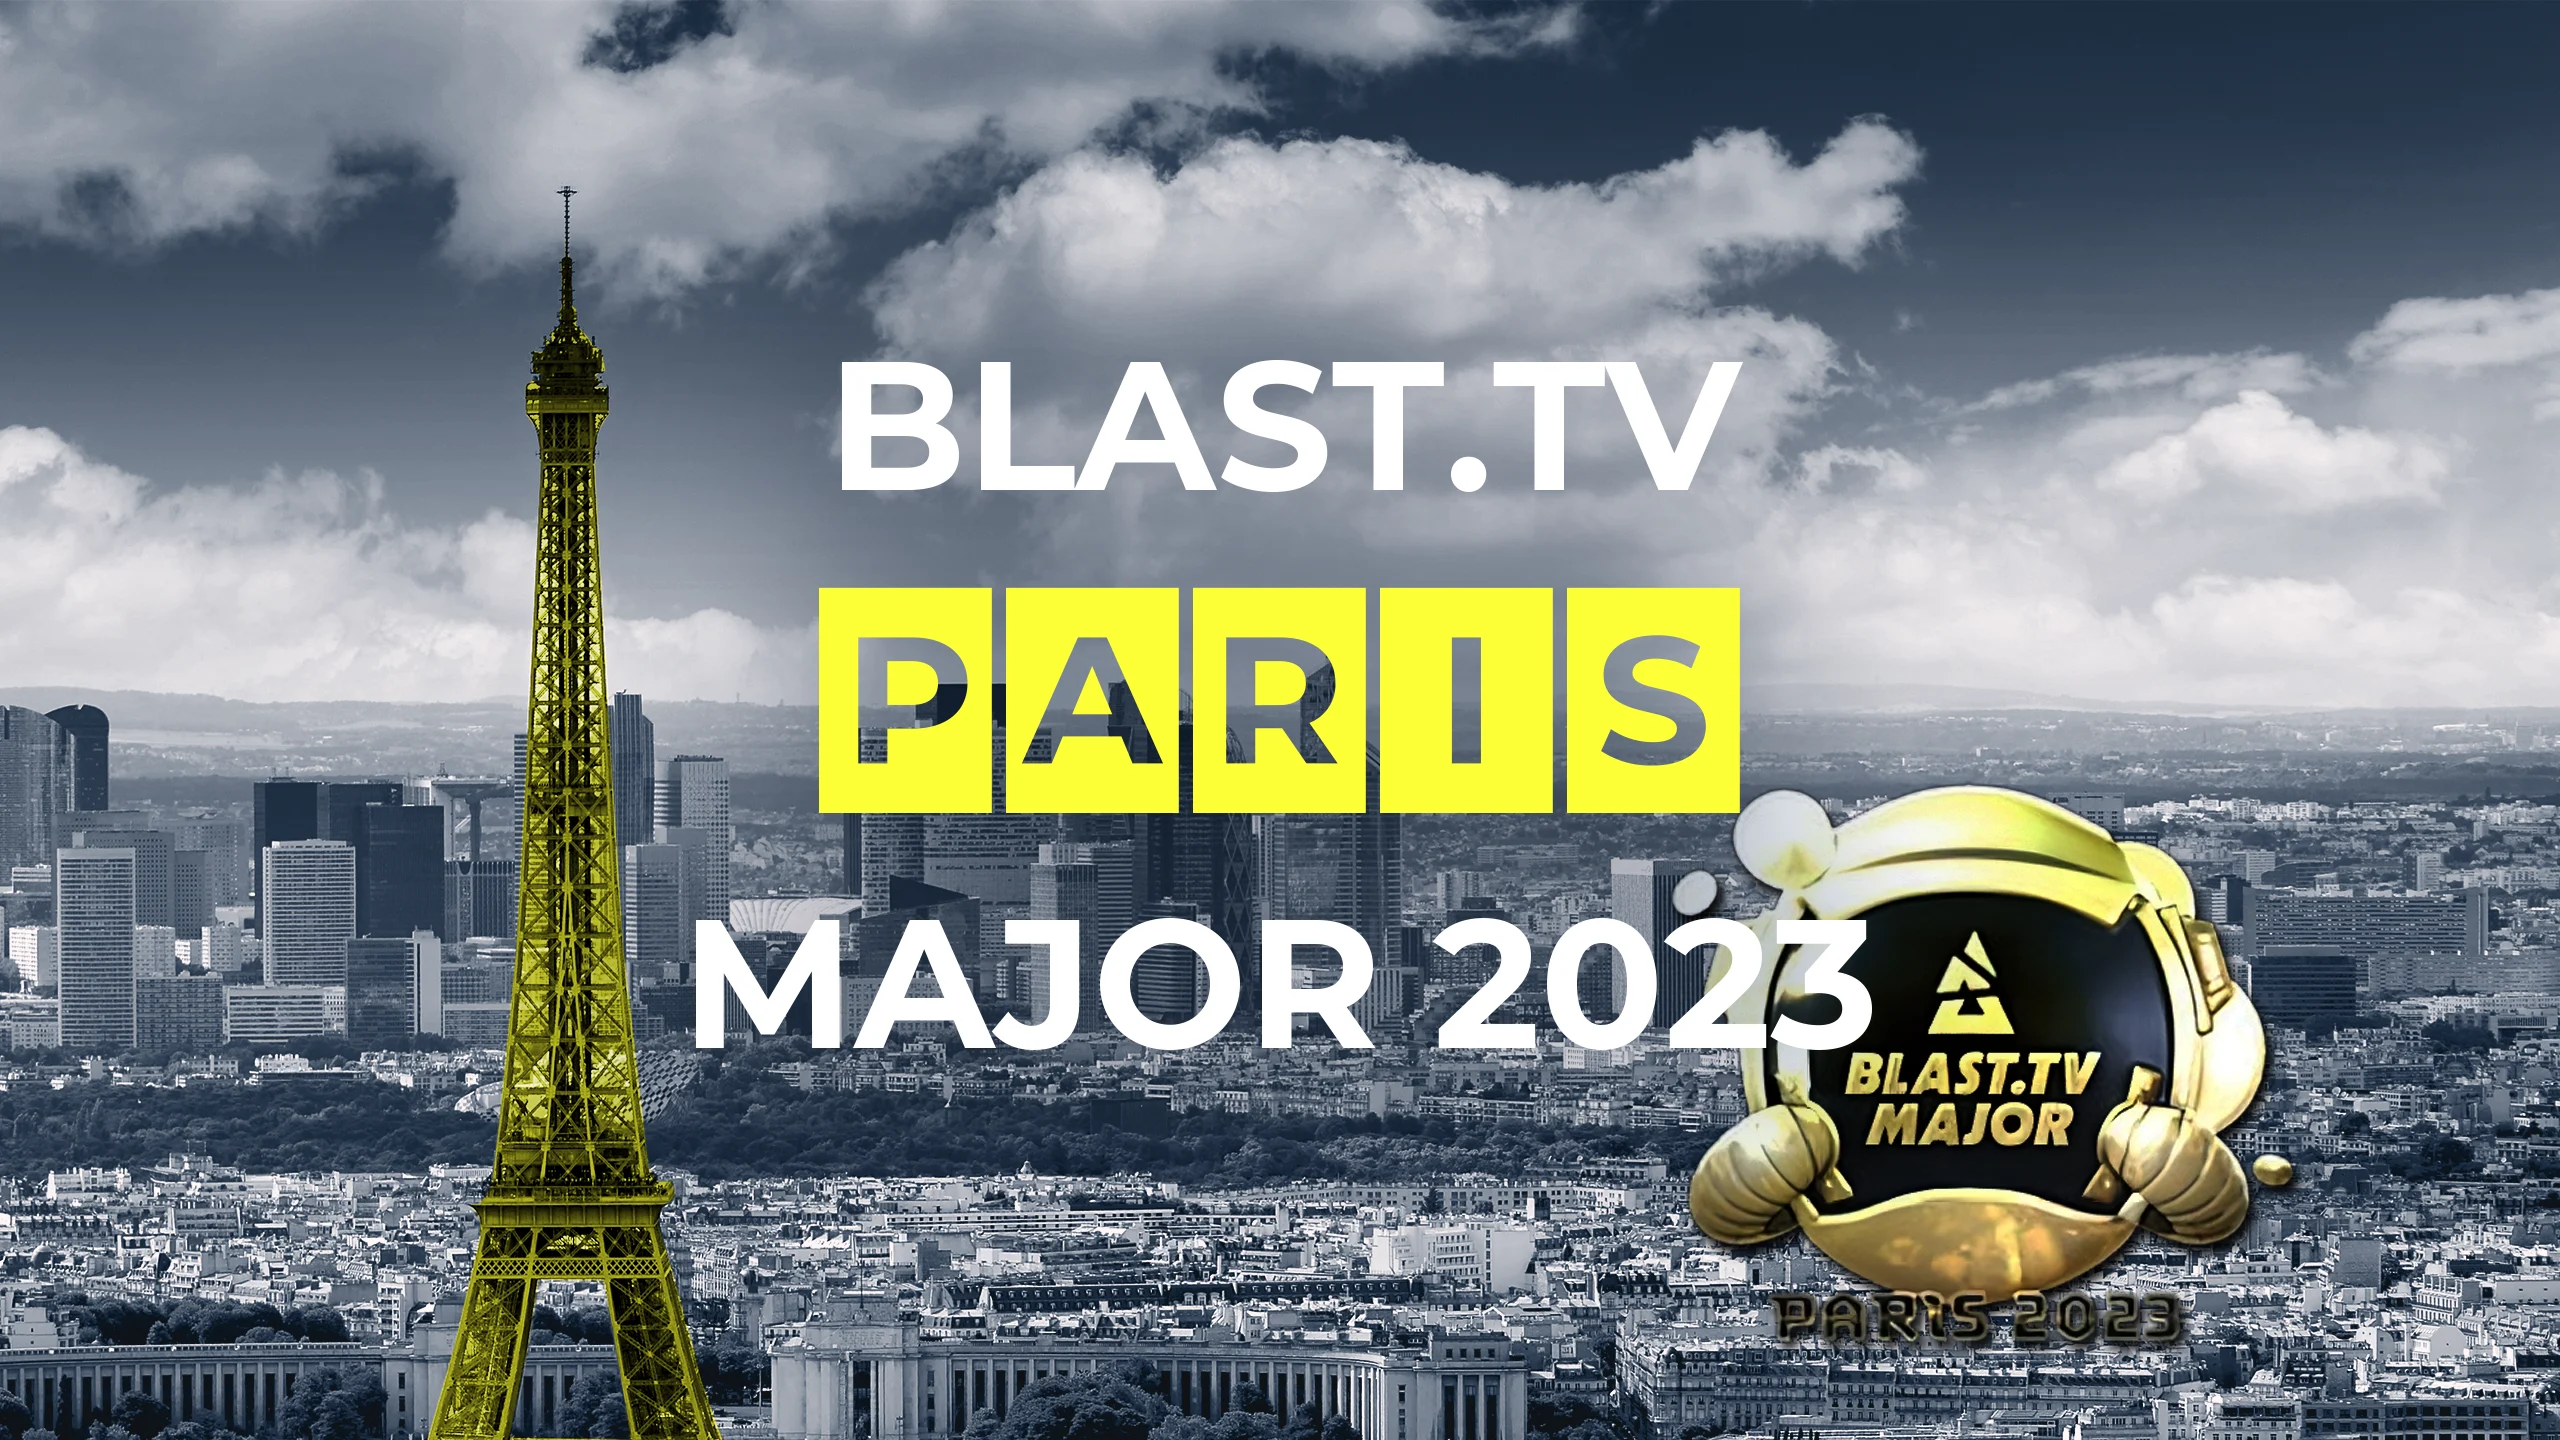 Blast Paris CS:GO Major has begun!